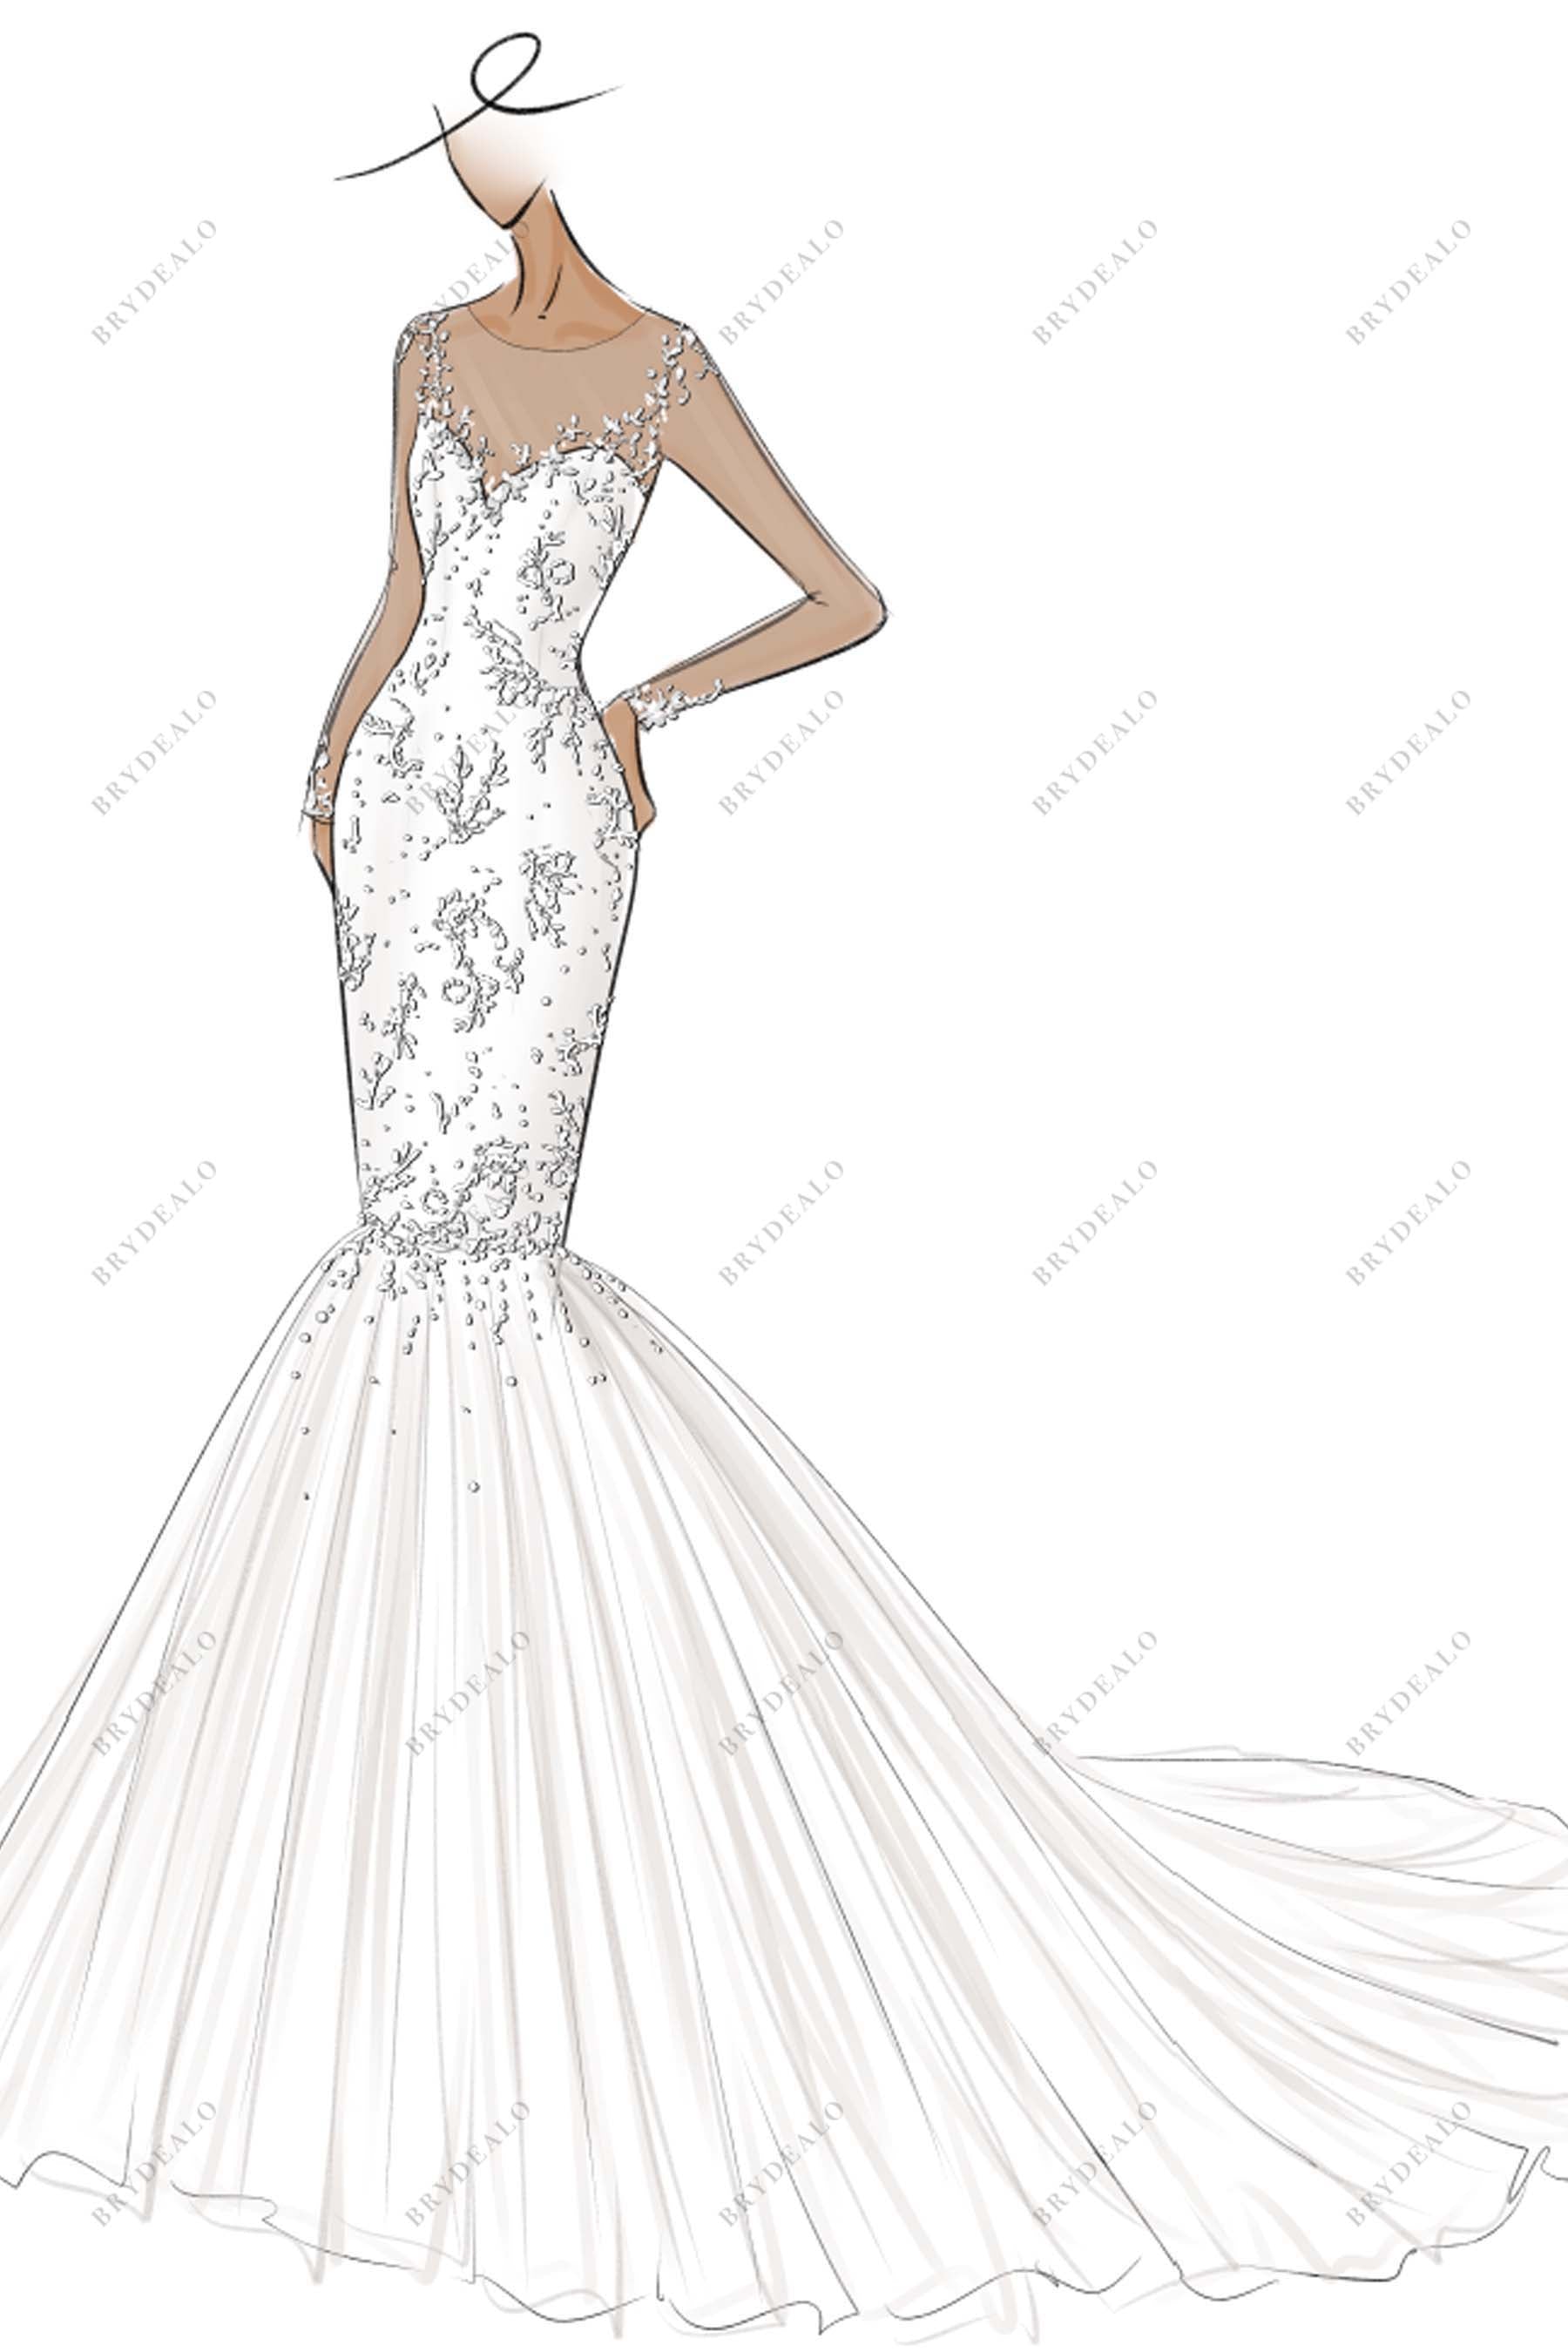 Illusion Neck Tulle Designer Trumpet Bridal Dress Sketch